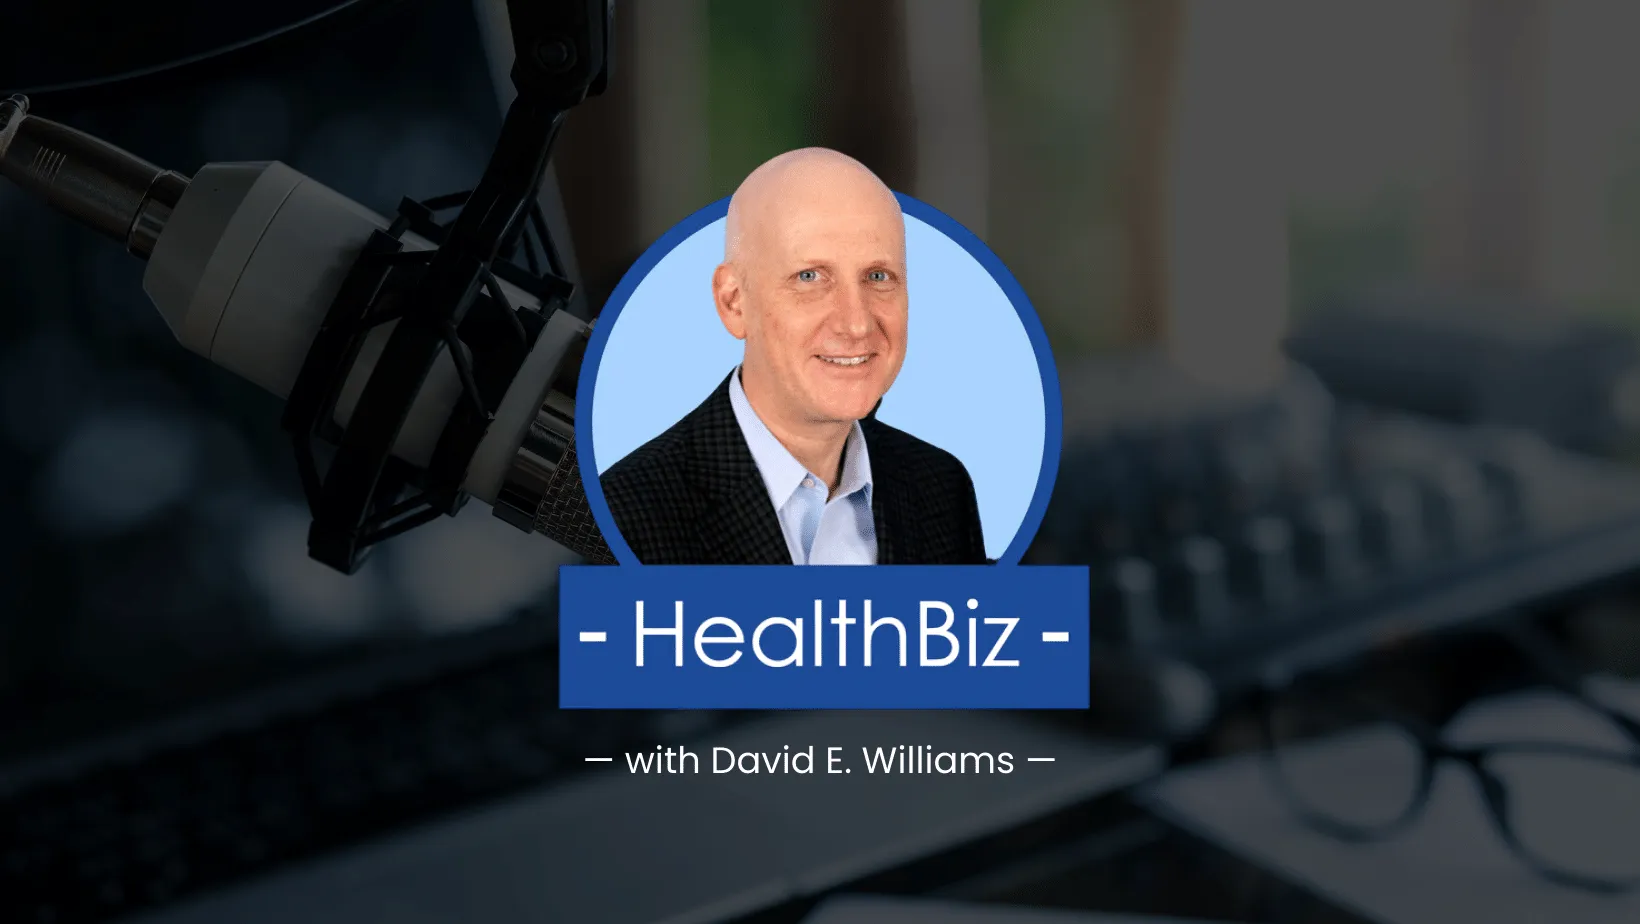 White Healthbiz with David E. Williams podcast logo over a dark background.